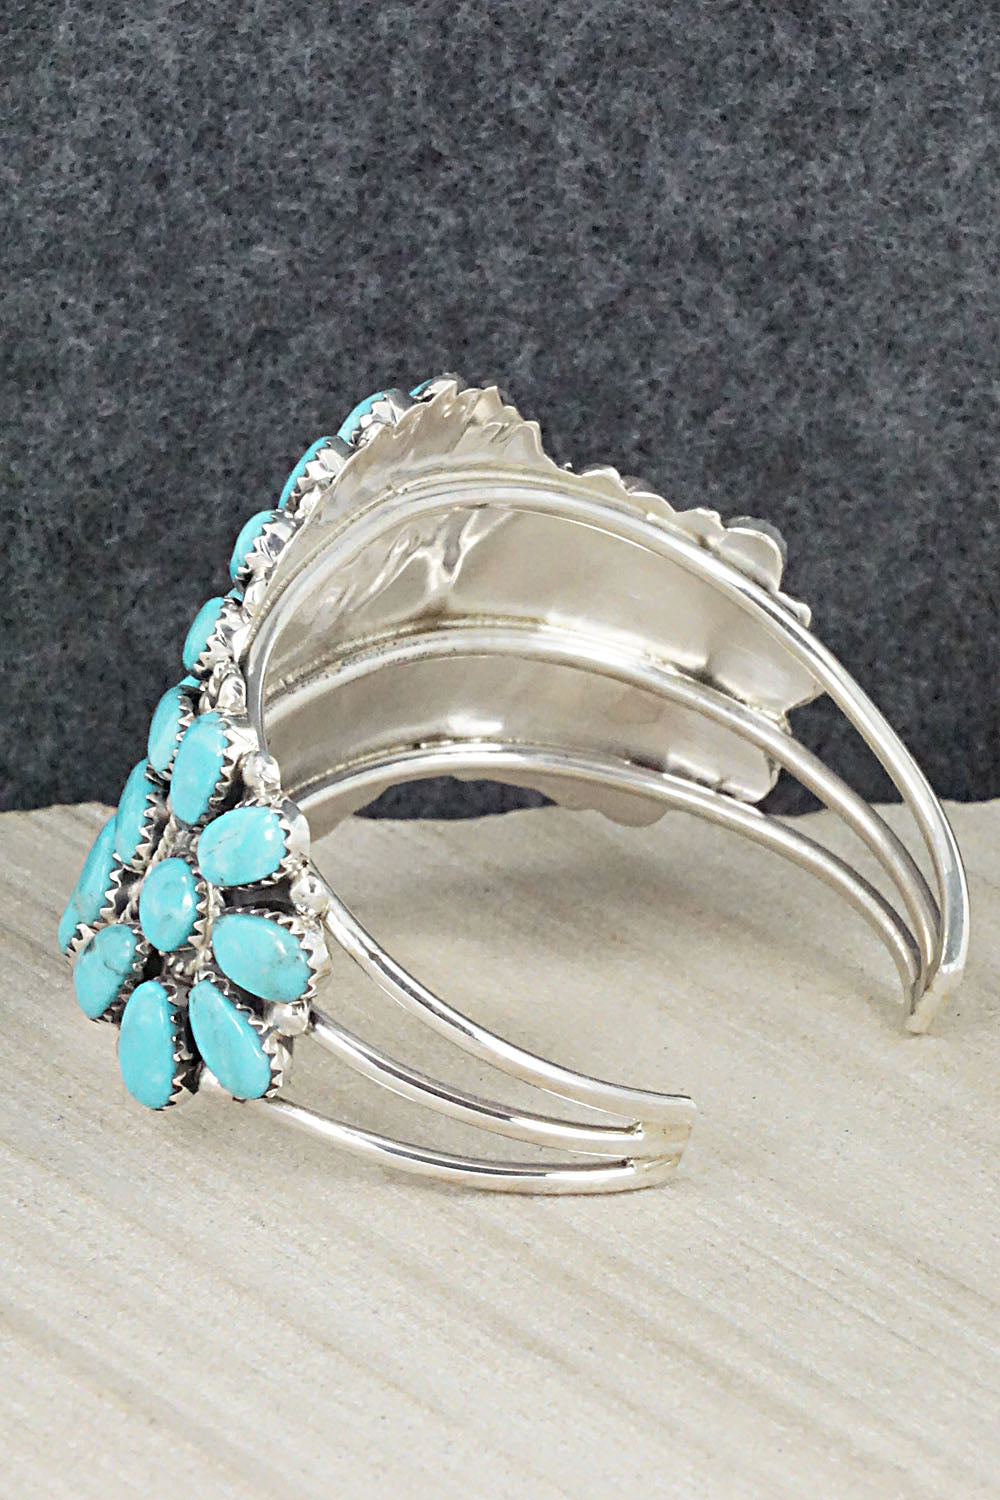 Turquoise & Sterling Silver Bracelet - Jesse Williams